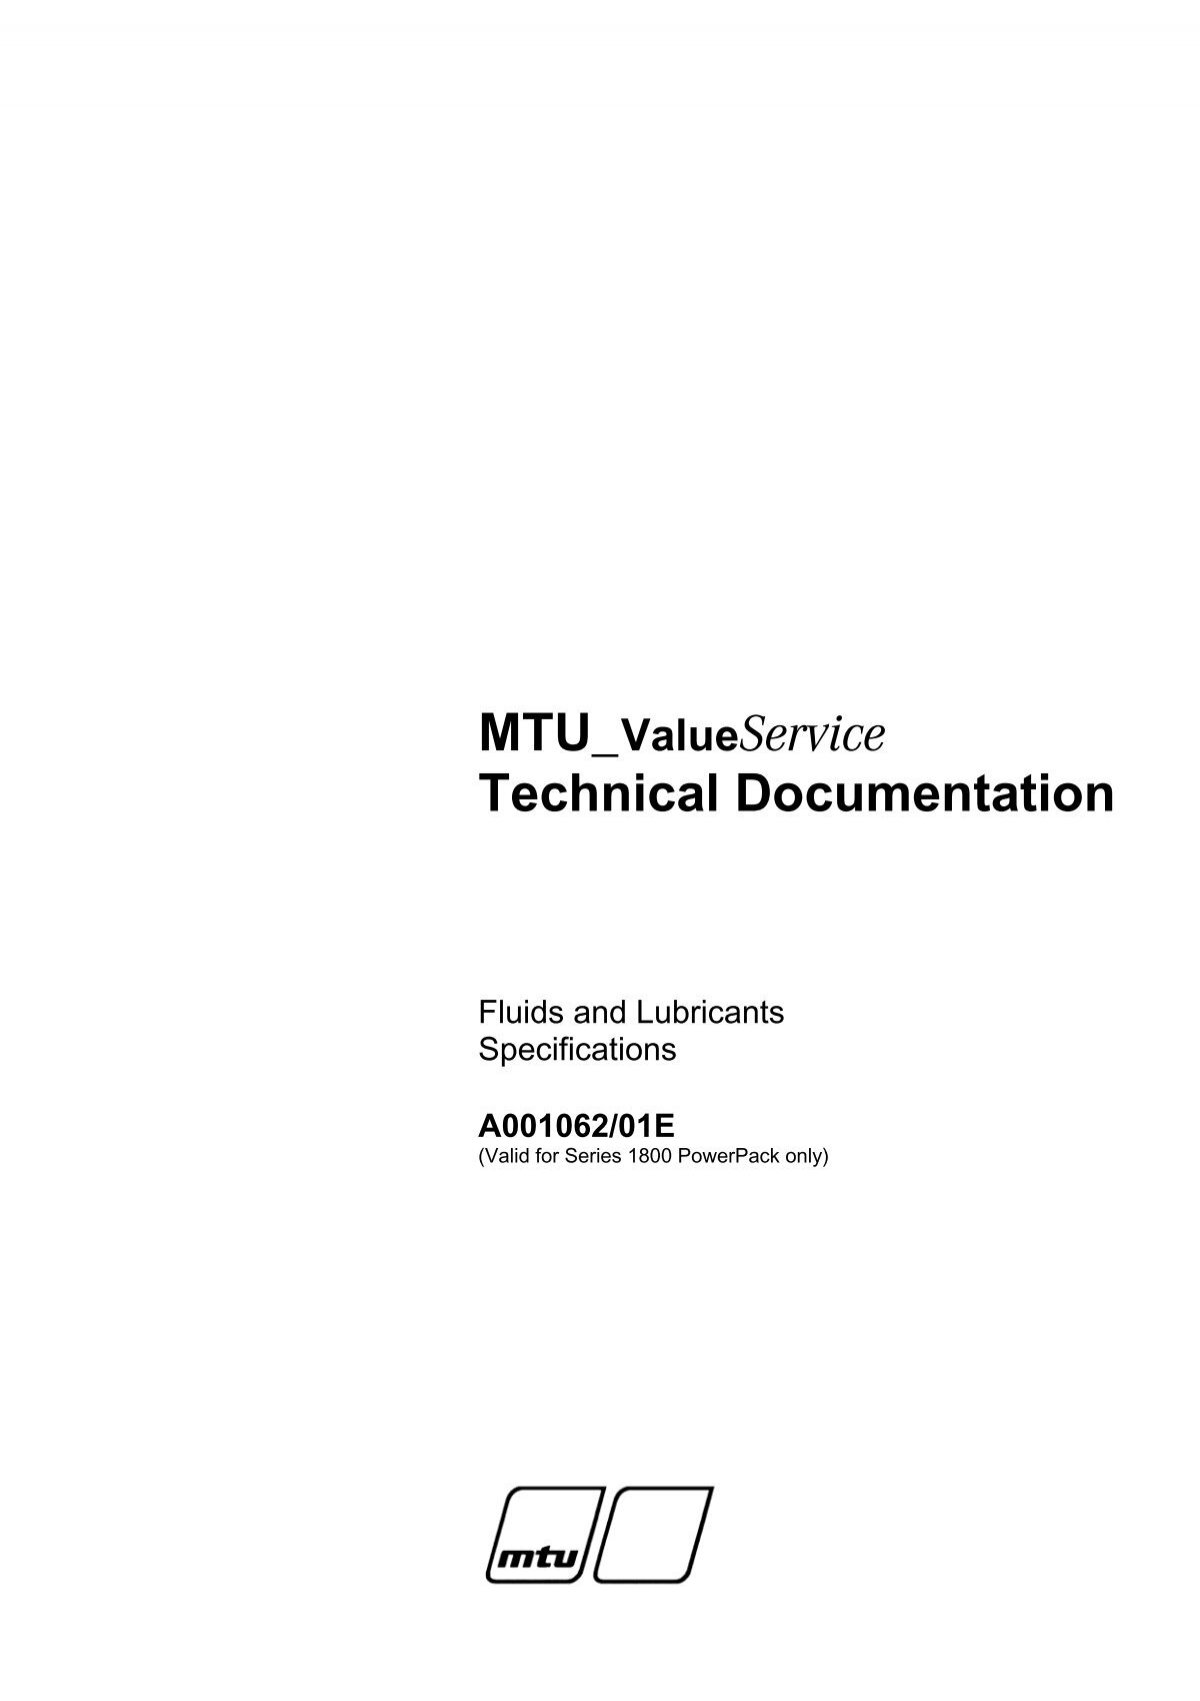 MTU_ValueService Technical Documentation